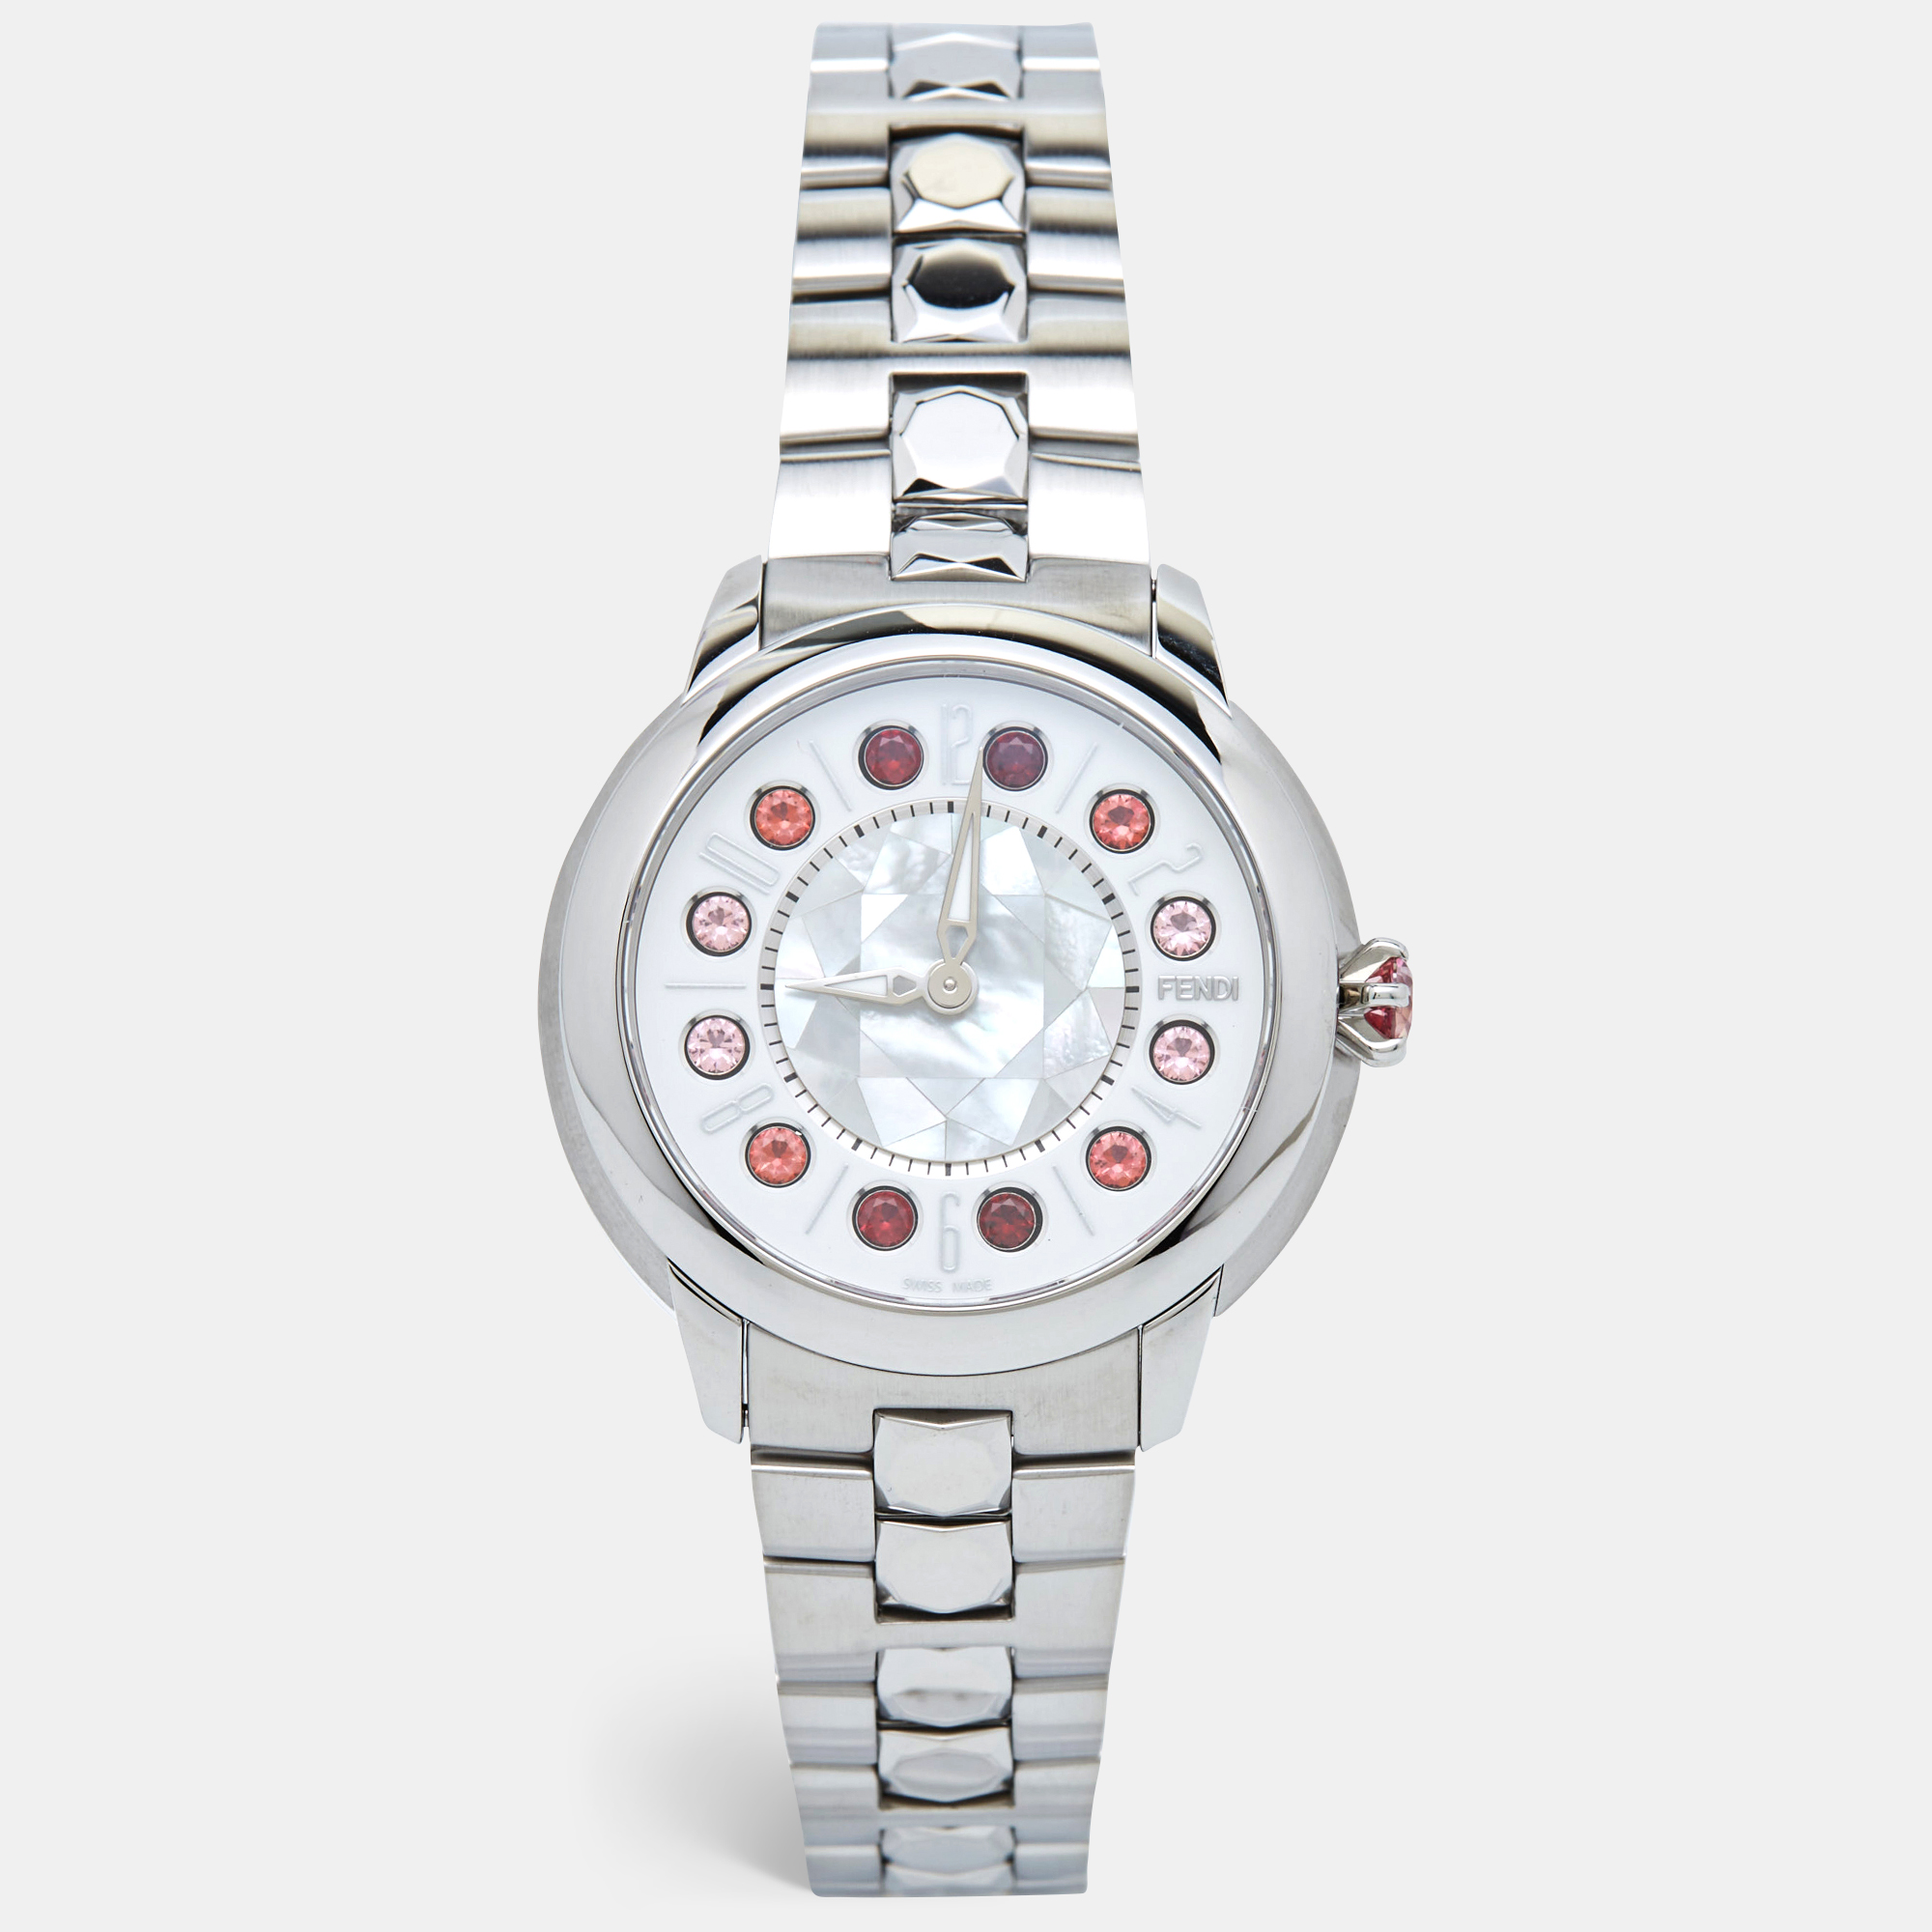 Fendi Mother Of Pearl Stainless Steel IShine 12100M Women's Wristwatch 38 Mm